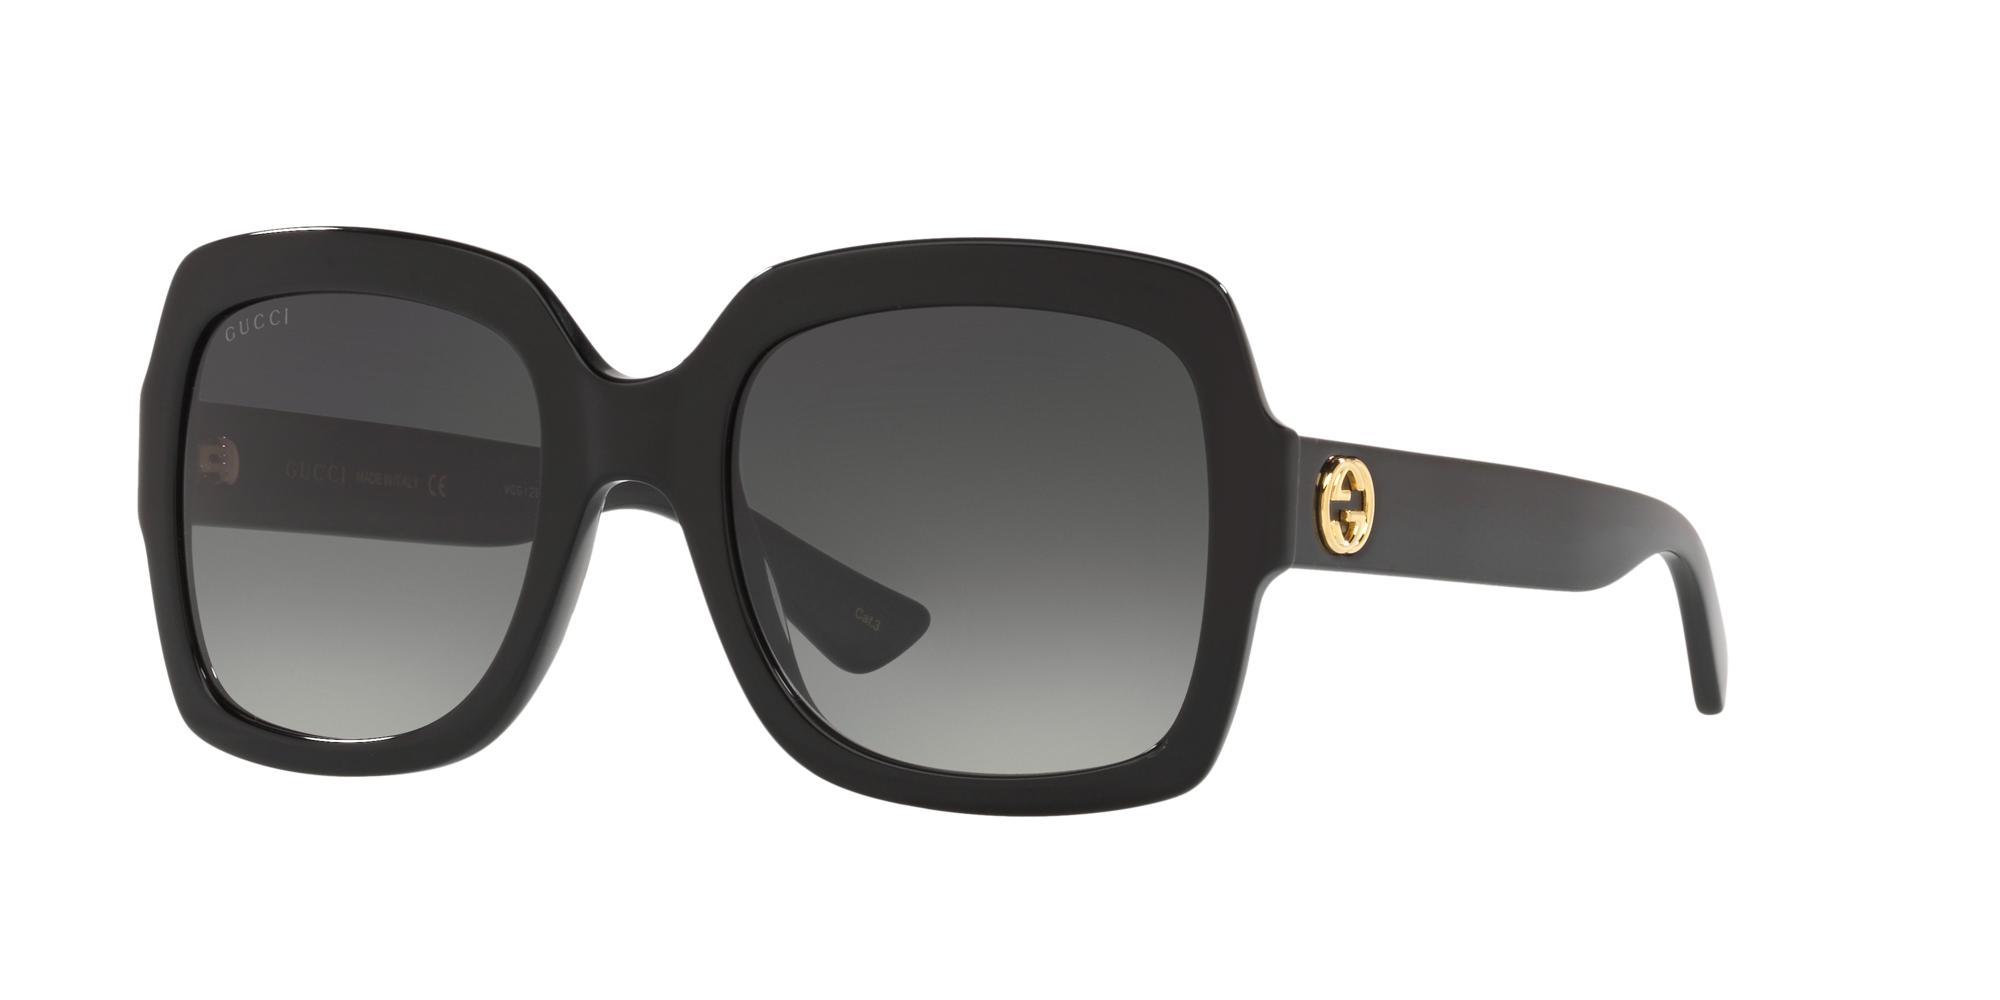 Gucci Oversized Square Black Frame Sunglasses Product Image